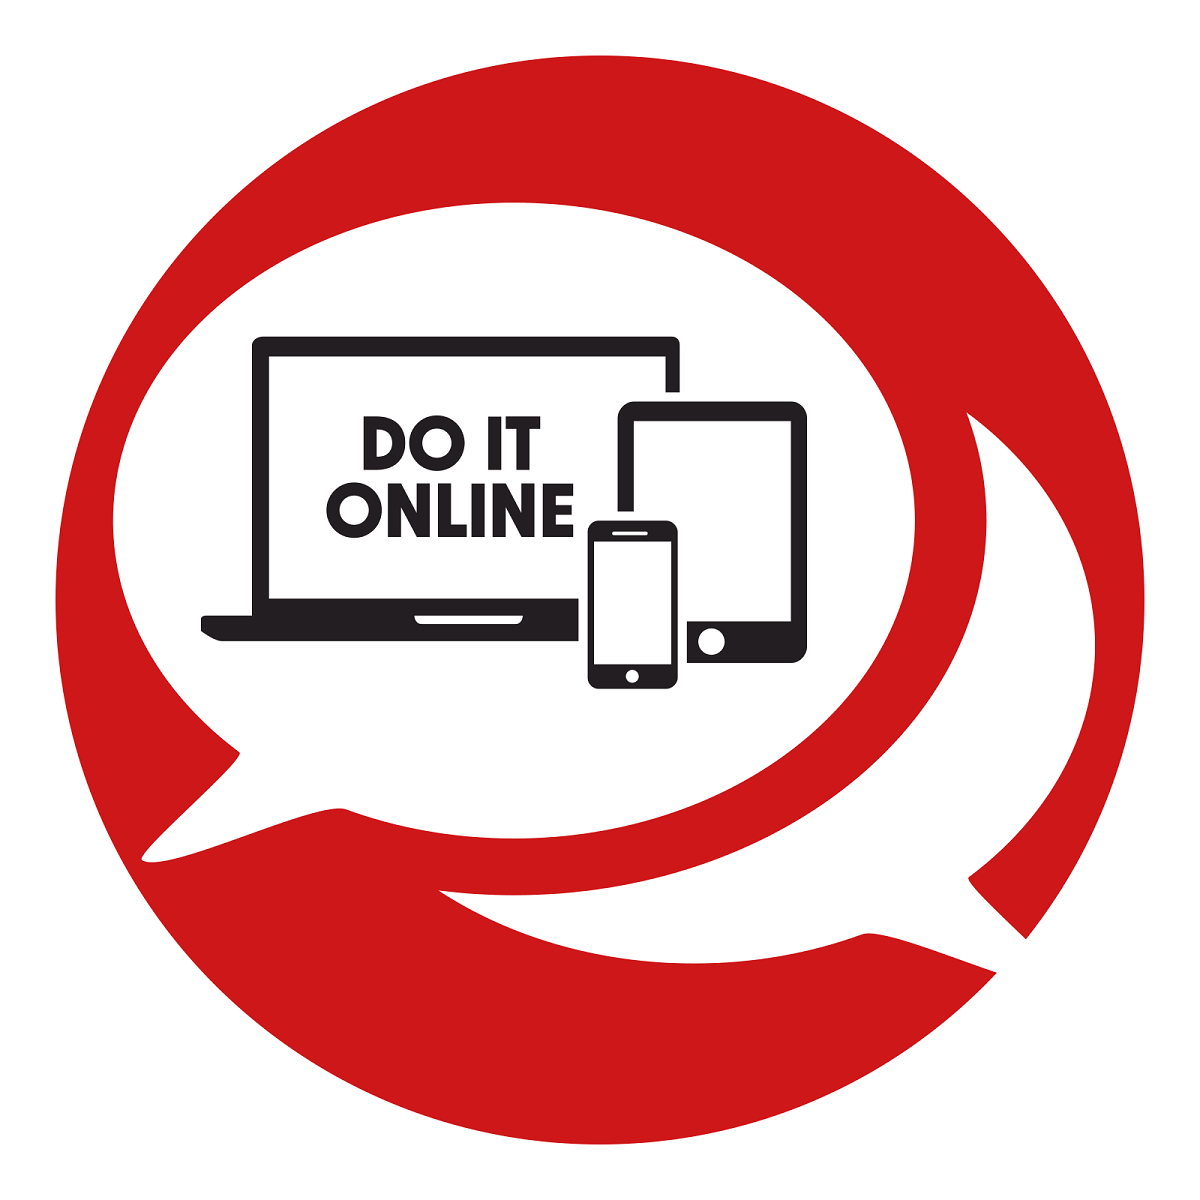 Web chat: Do it online